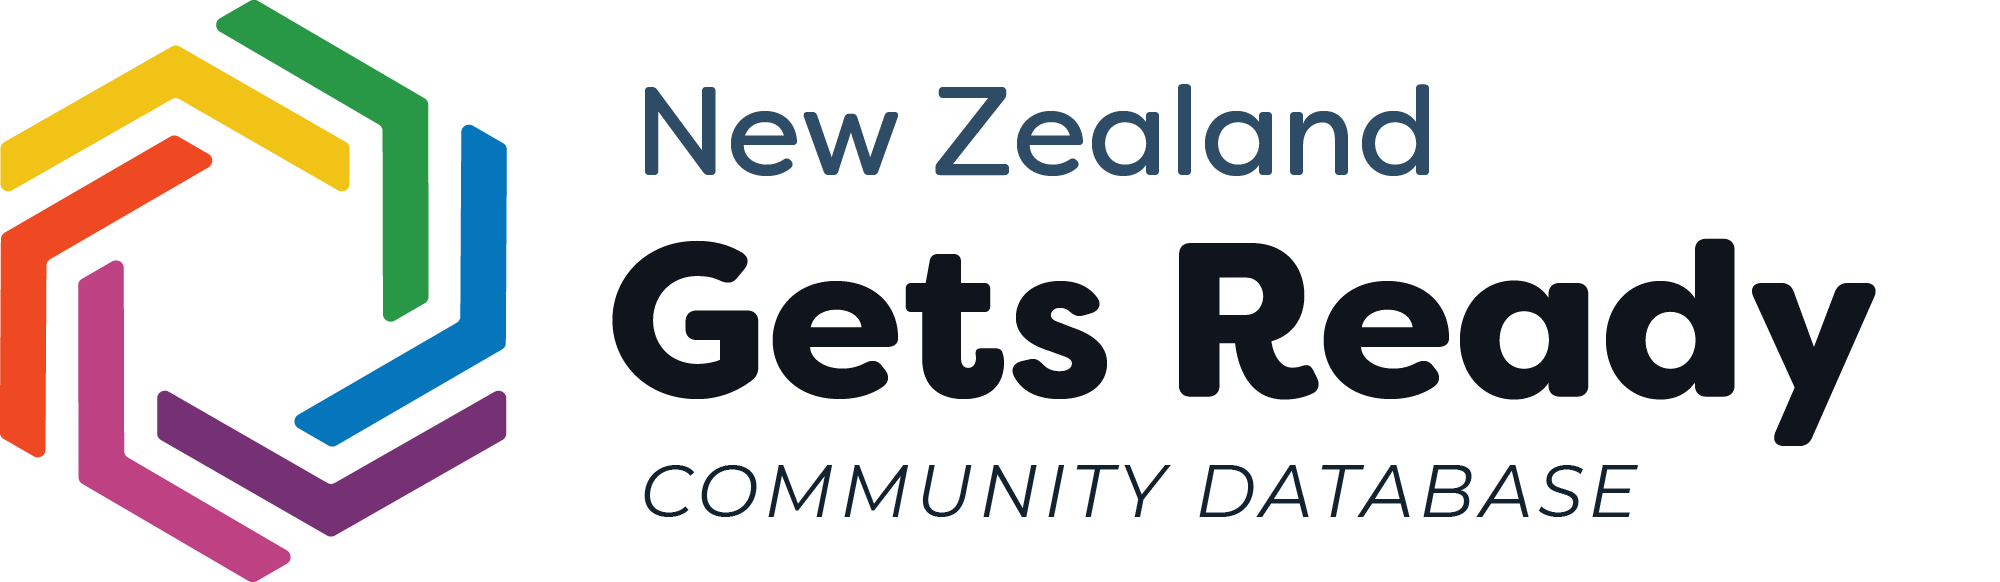 NZ Gets Ready - Community database